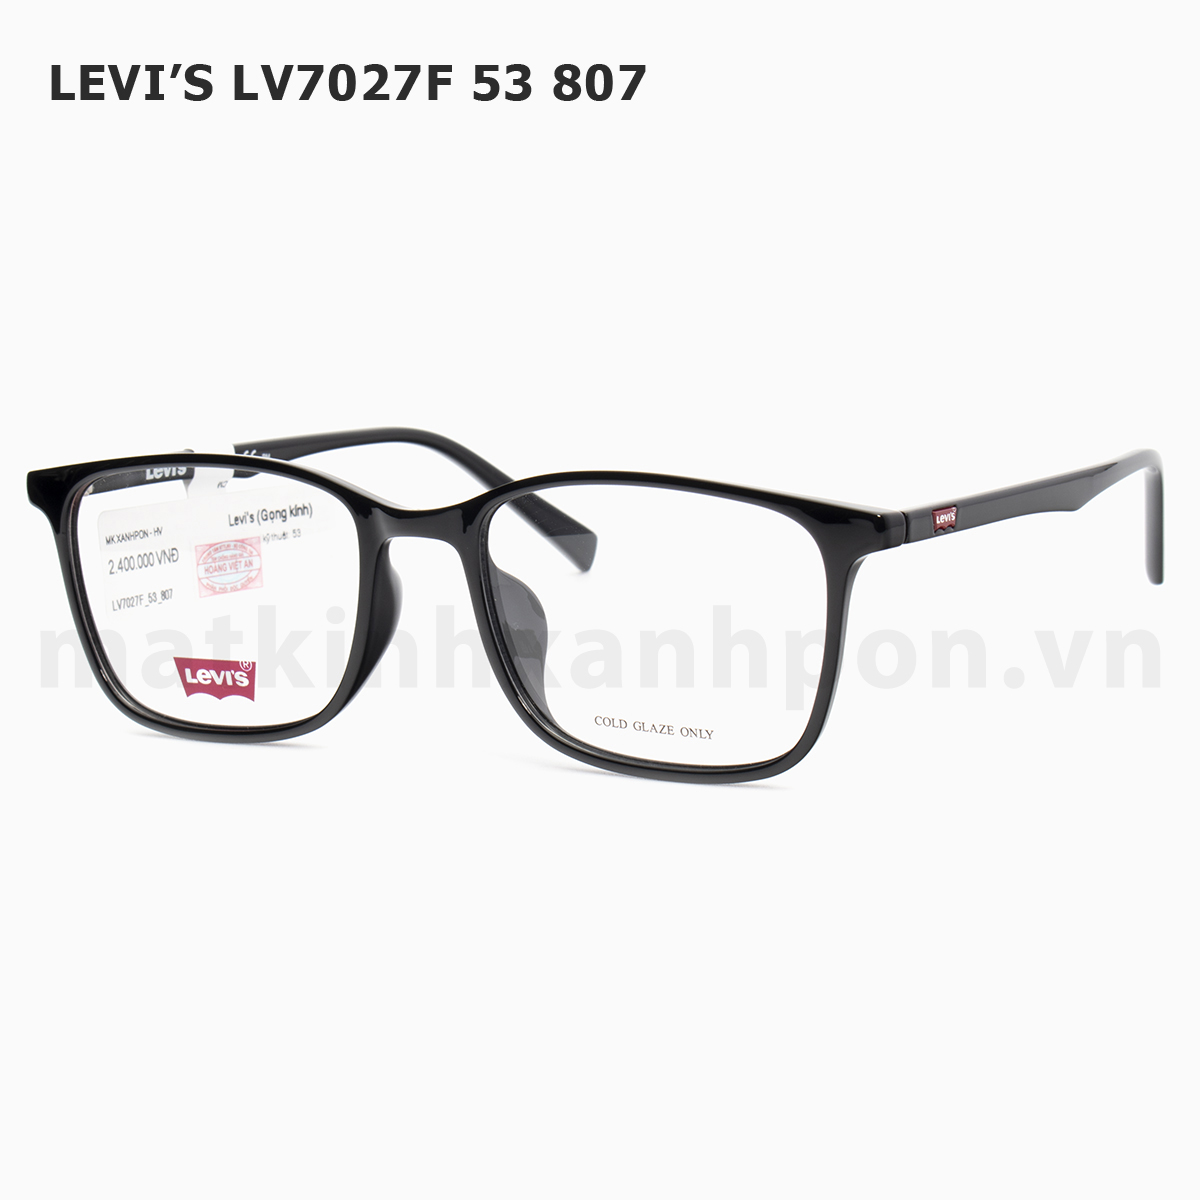 Levi’s LV7027F 53 807